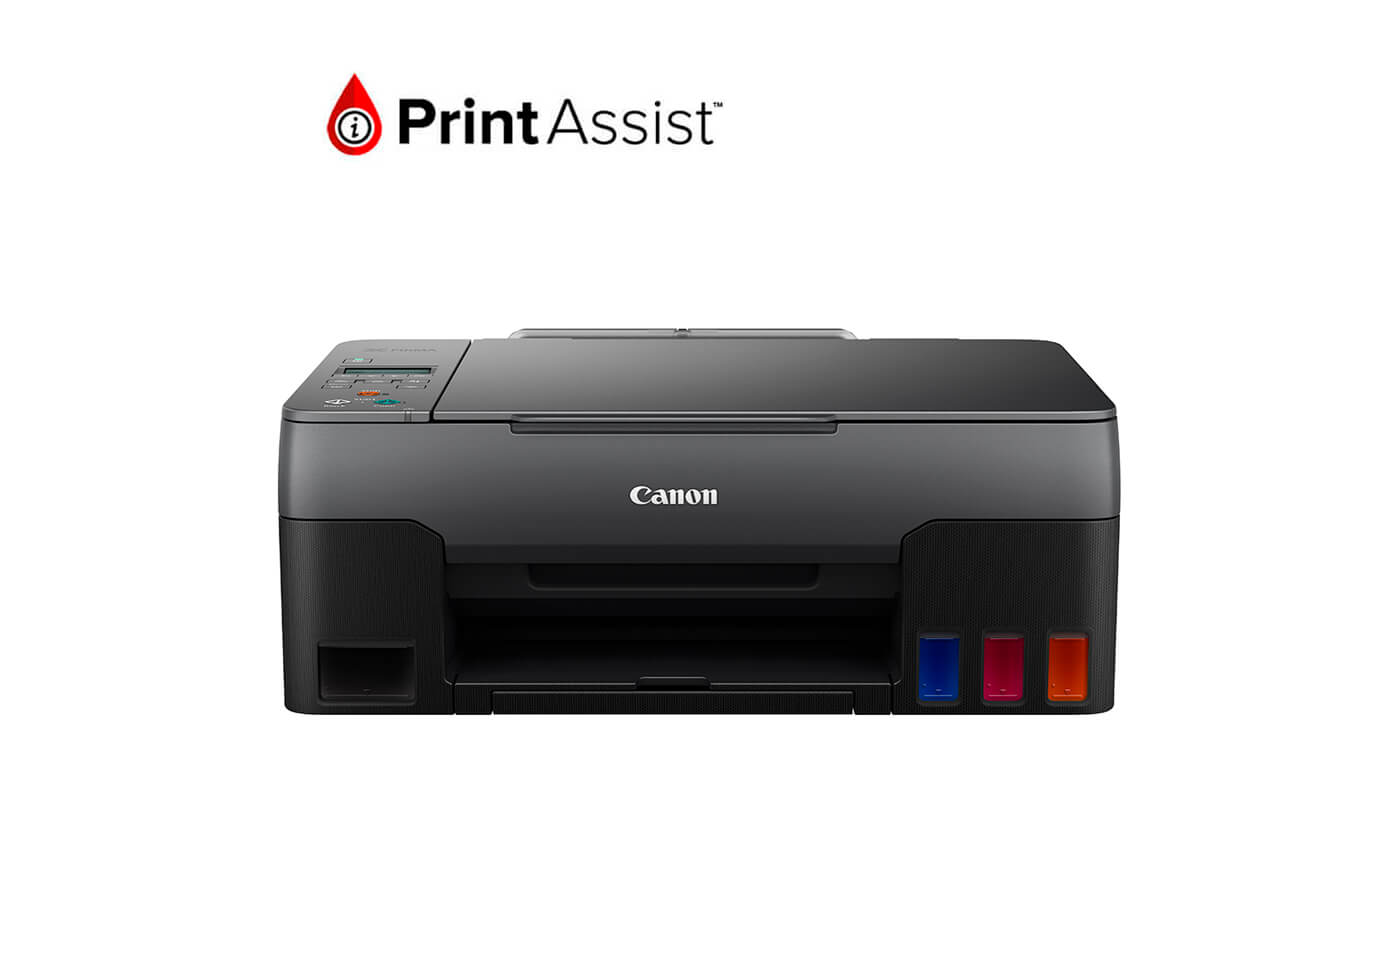 Product image of PIXMA G3620 MegaTank printer with Print Assist